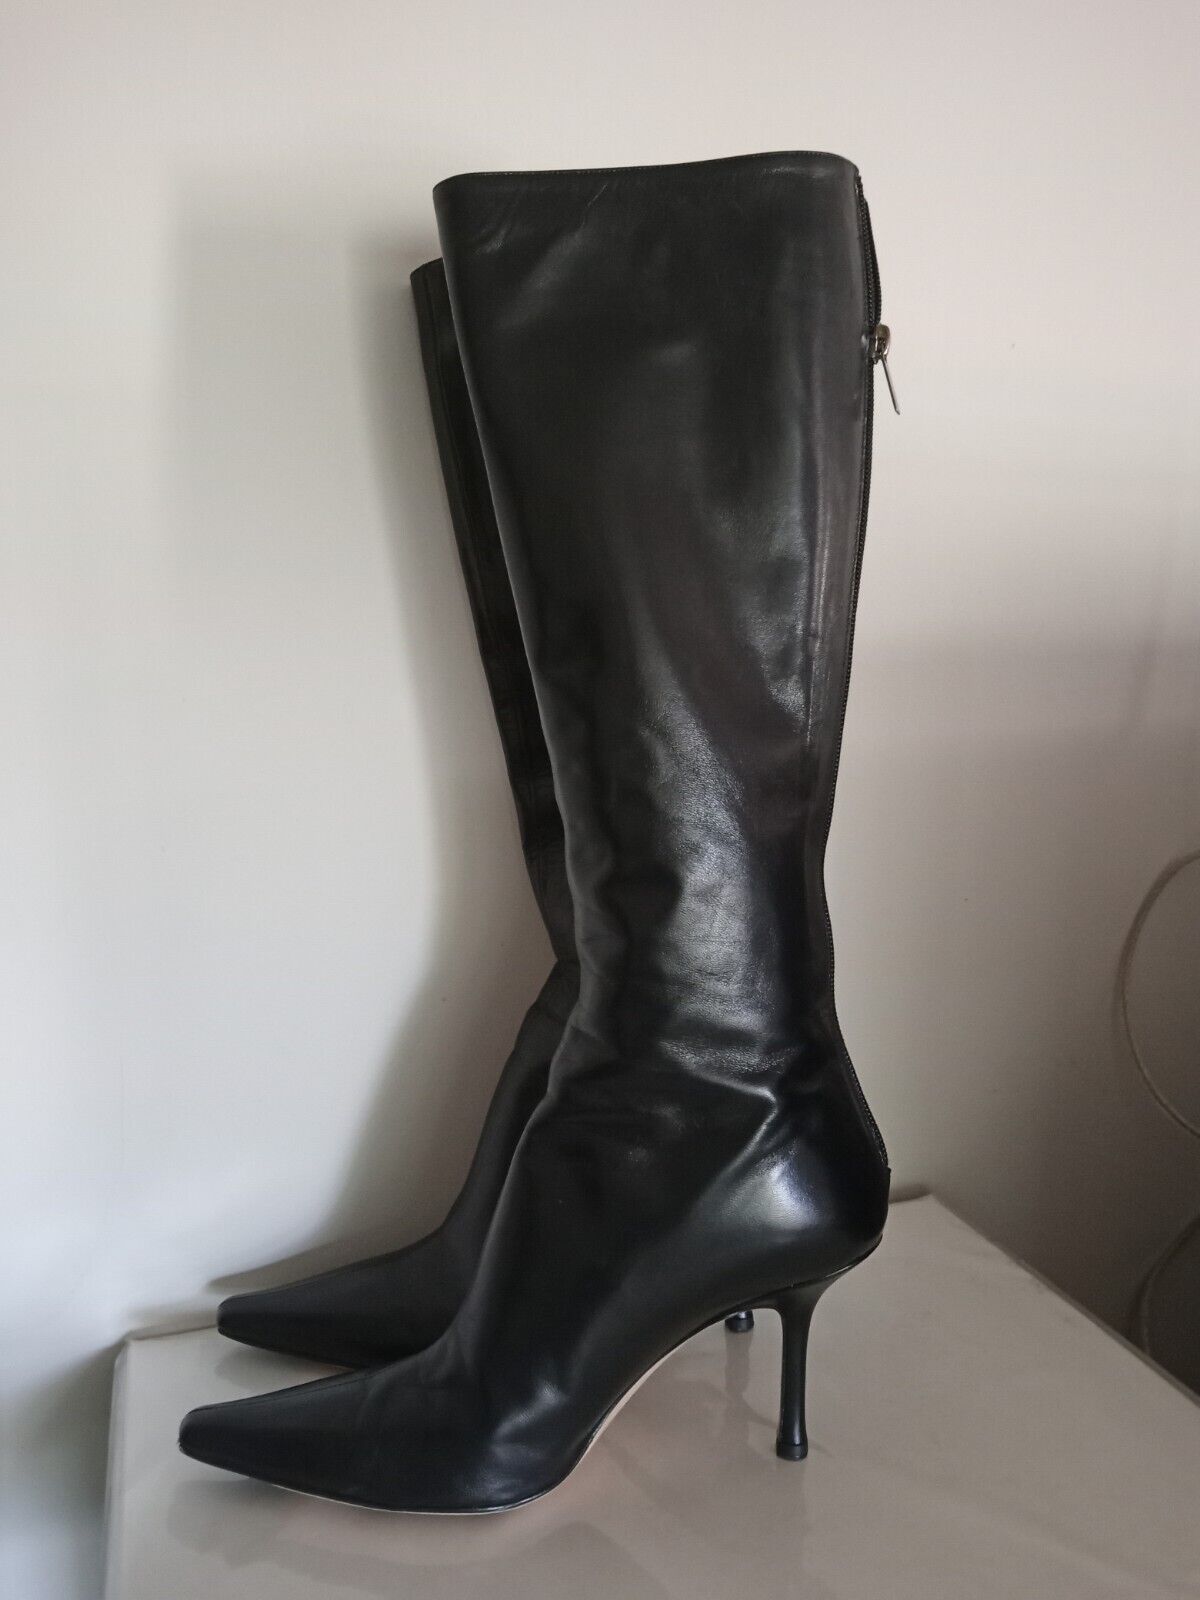 Jimmy Choo black leather knee high boots womens Size 8.5/39.5 eu 